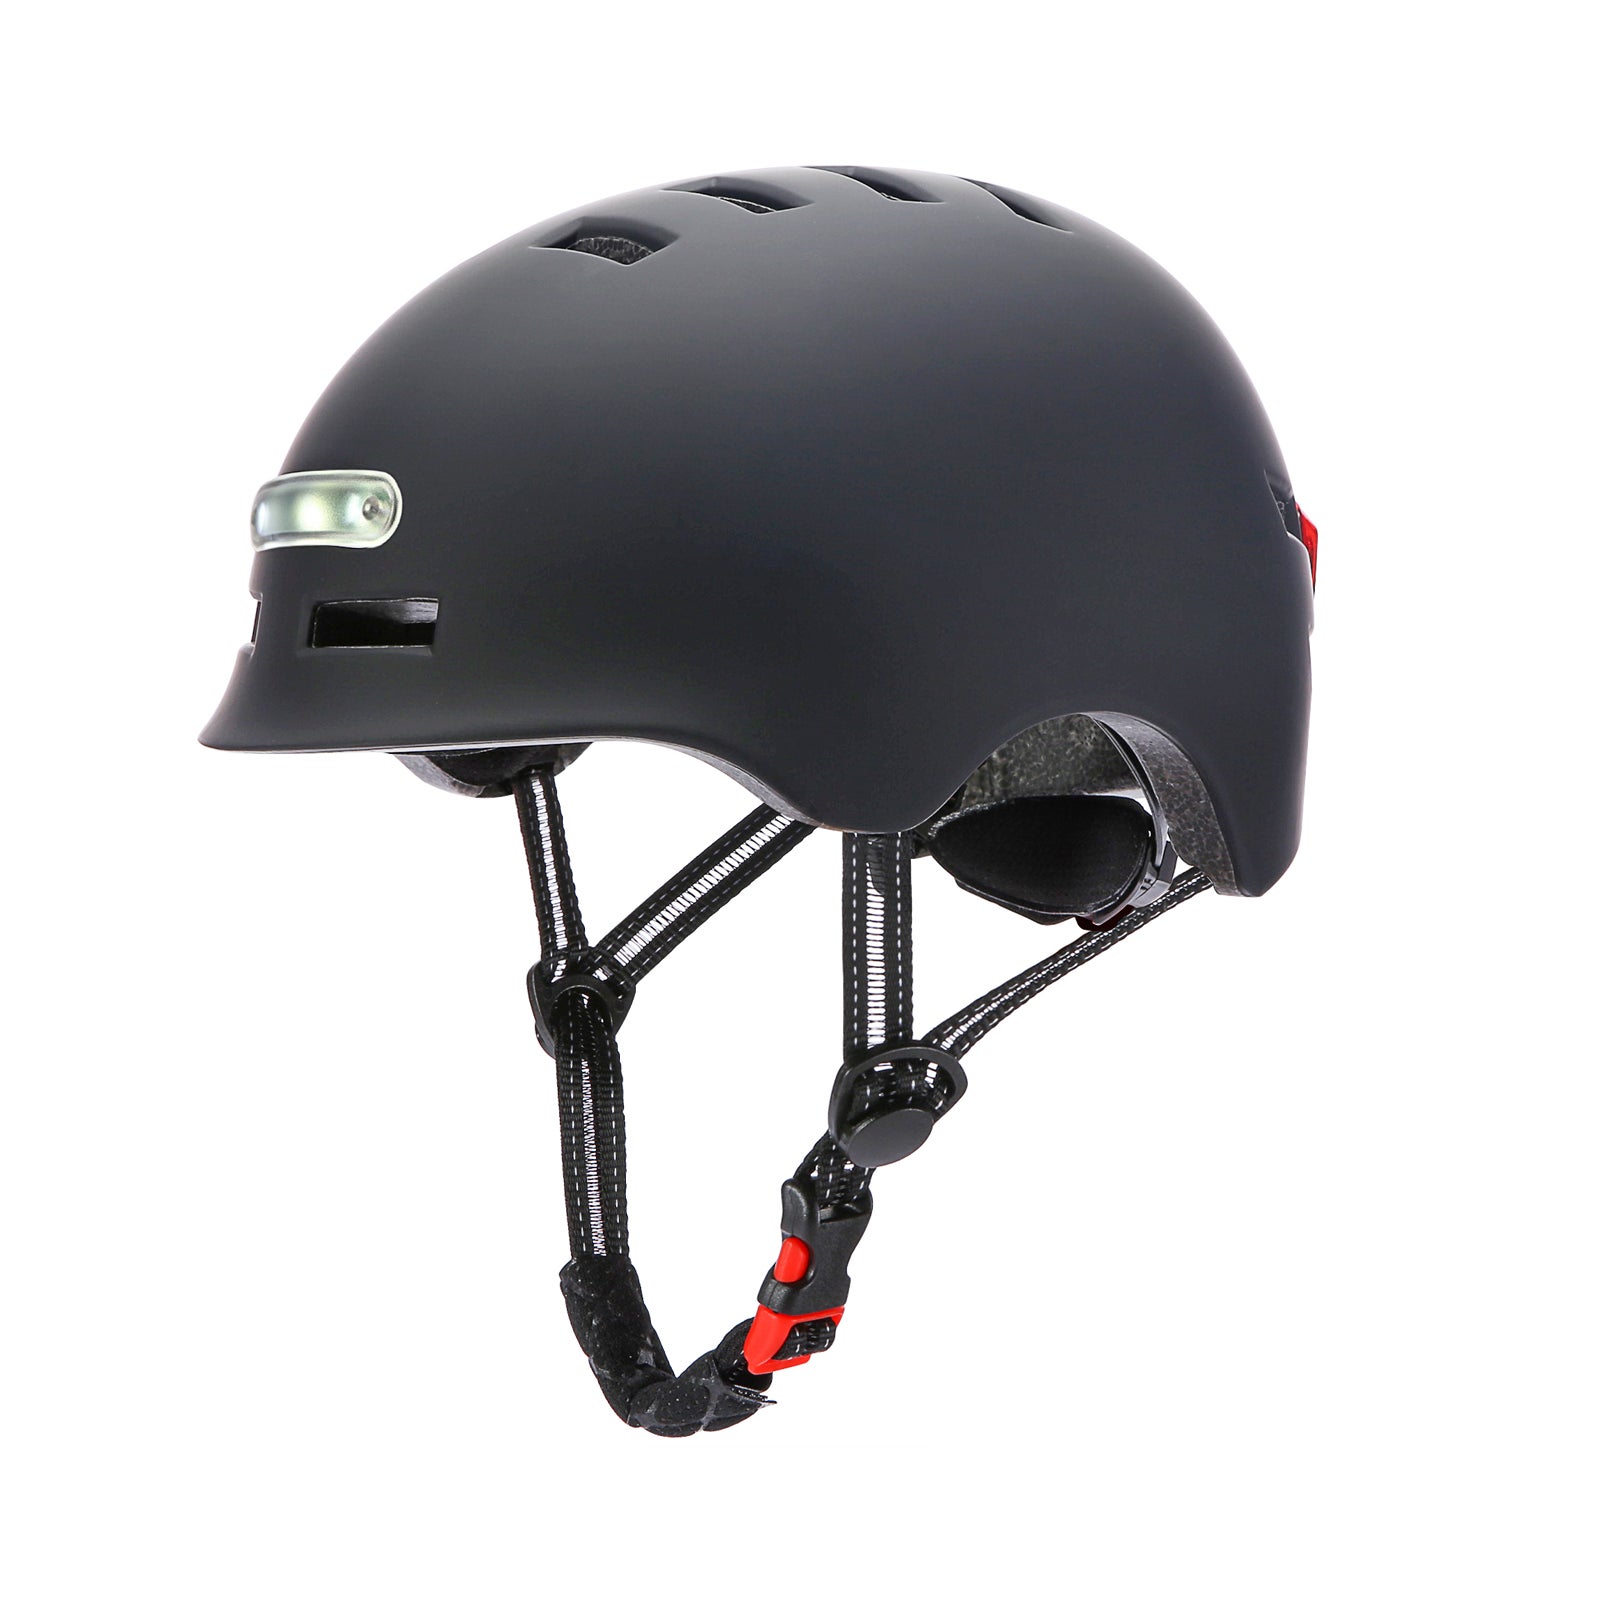 ACA M Size Black Smart Bike Cycling Bicycle Helmet Headlight Tail Warning Light Outdoor Sport